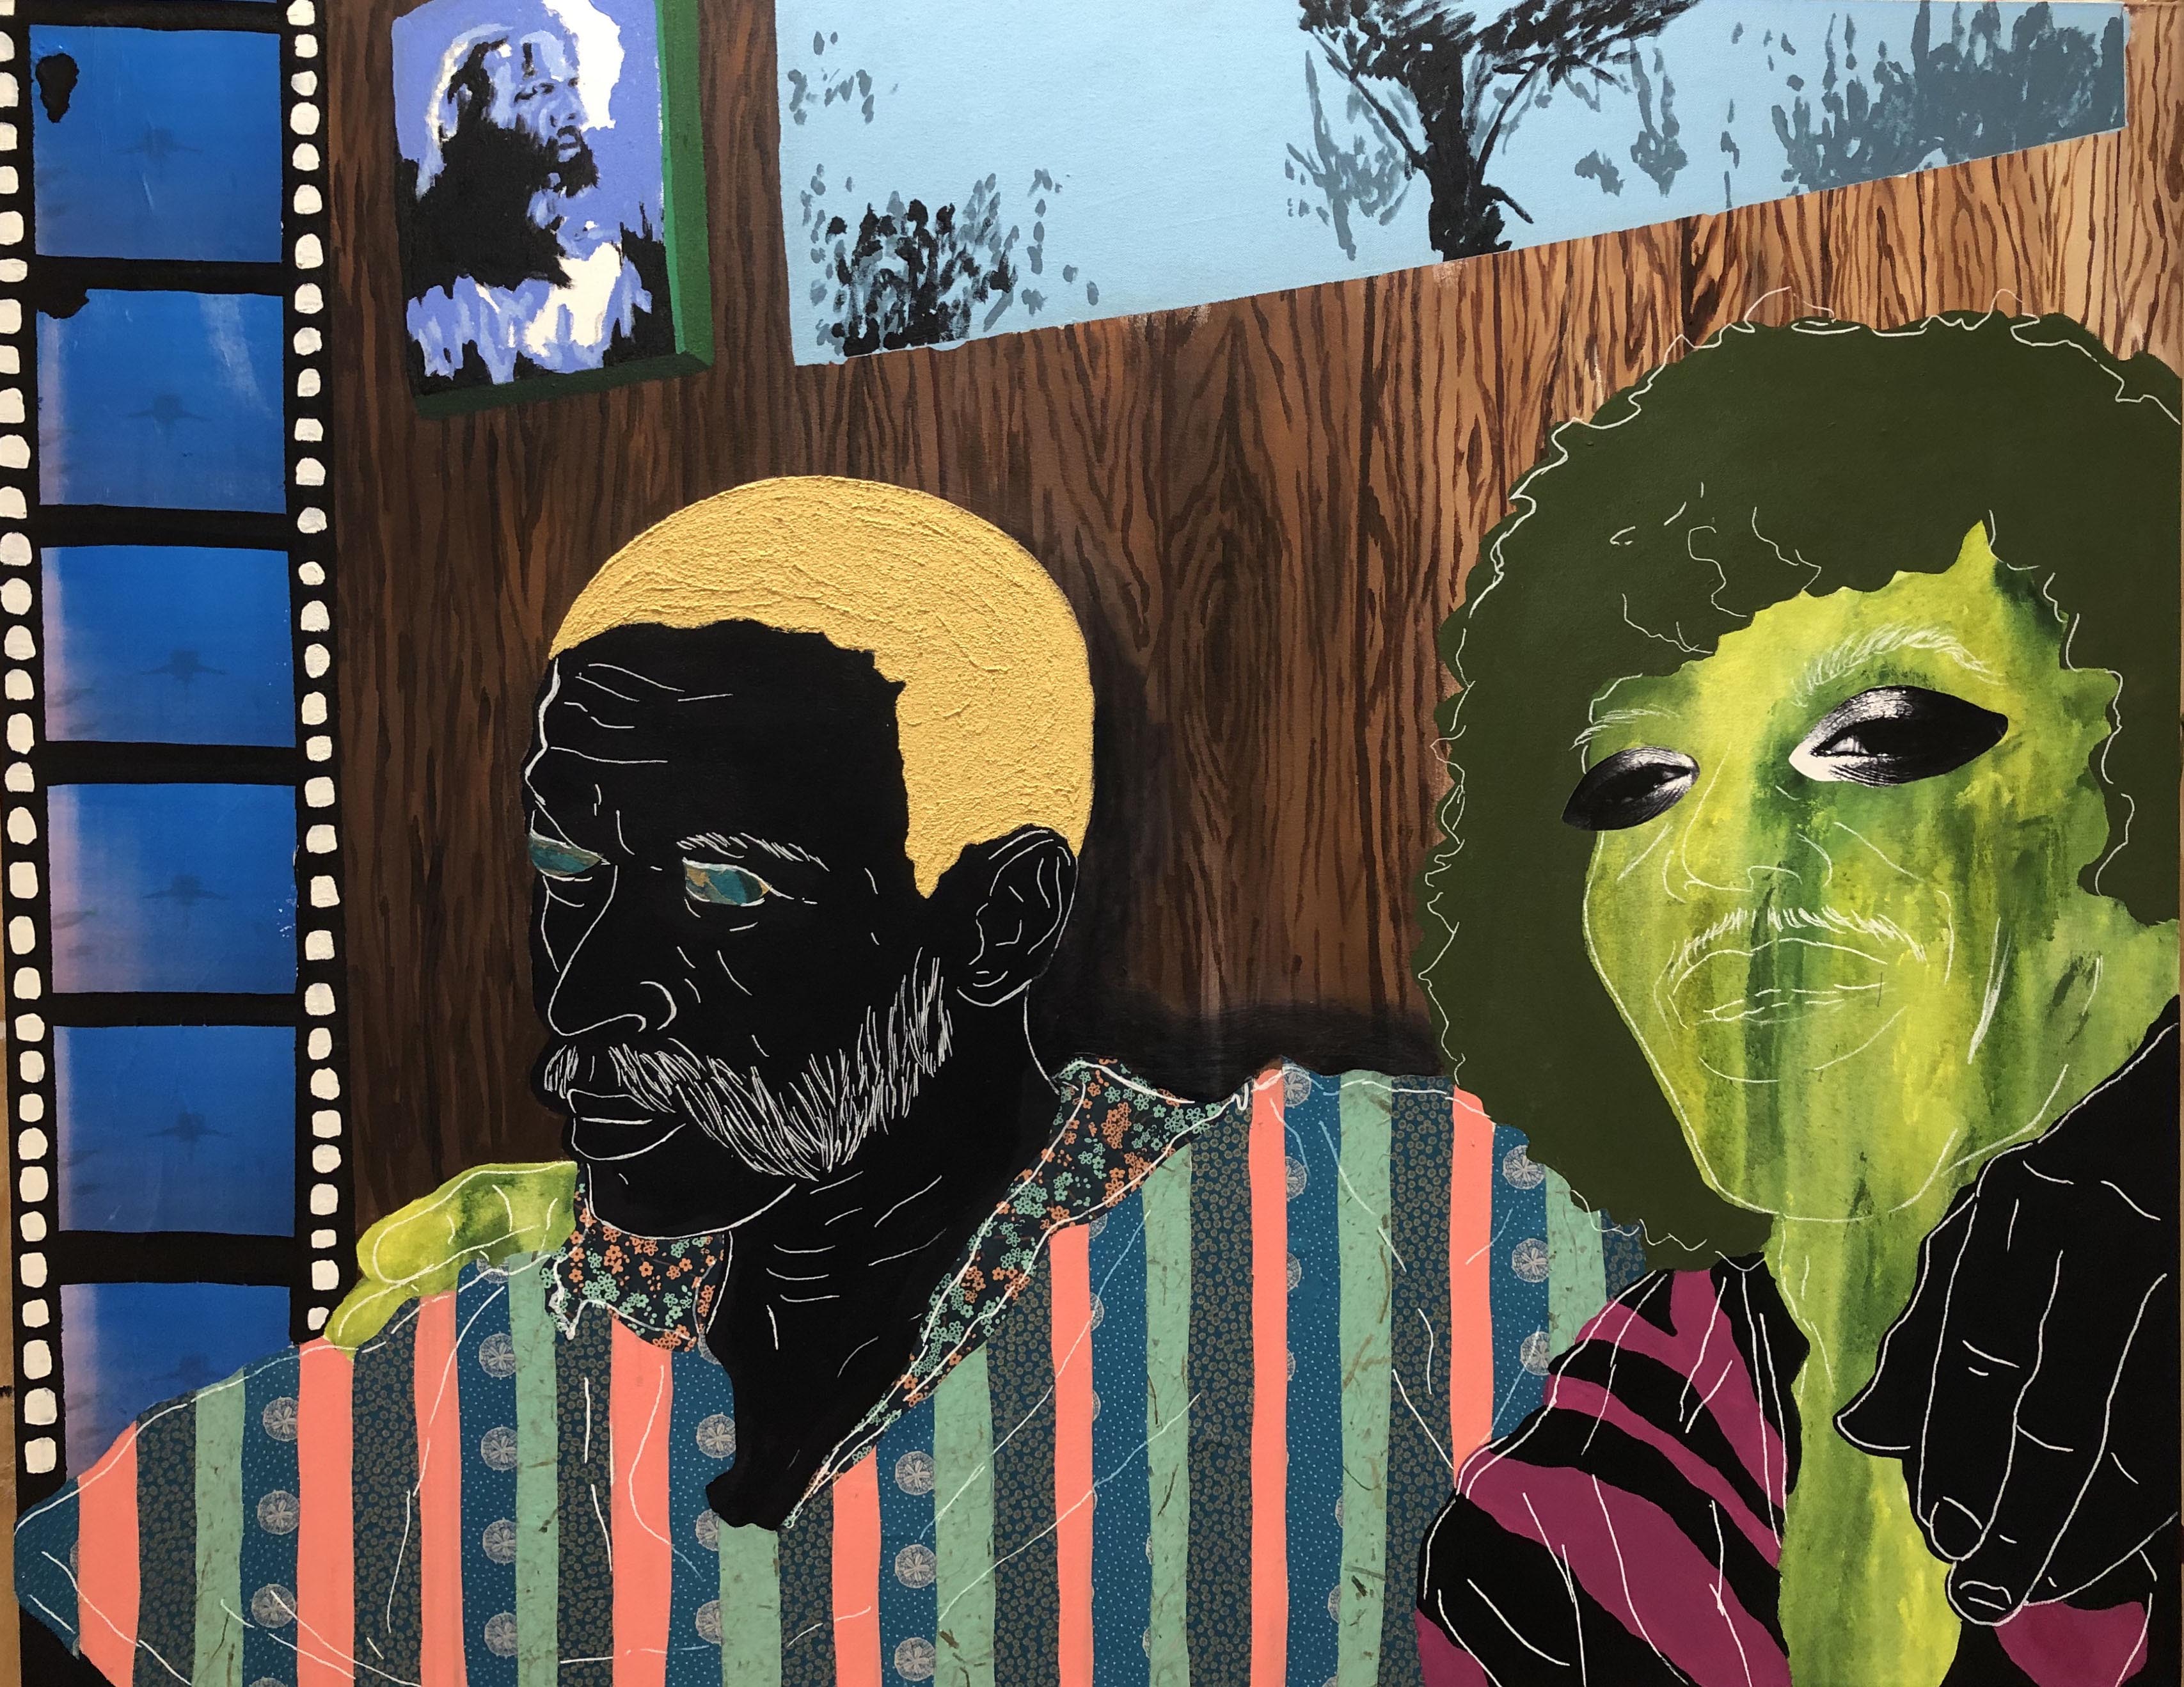 WePresent Cydne Jasmin Colebys deeply self-reflective collages